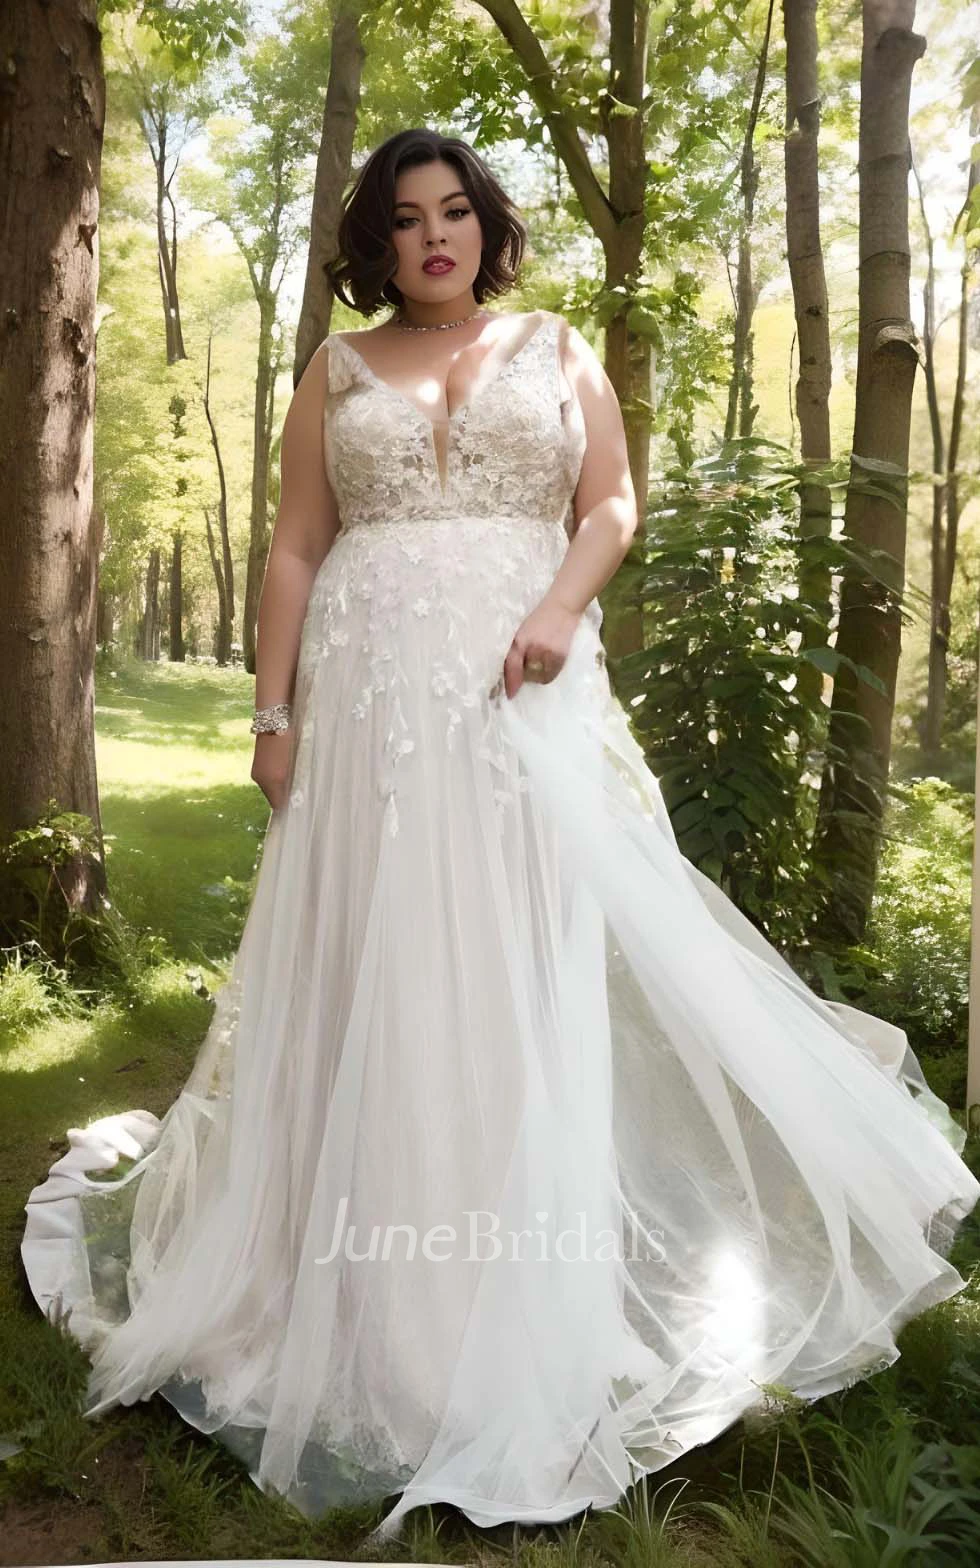 OEM Wholesale 2023 Whole Bridal Veil White Beige Color Lace Wedding Veils and Accessories for Women,2 Pieces